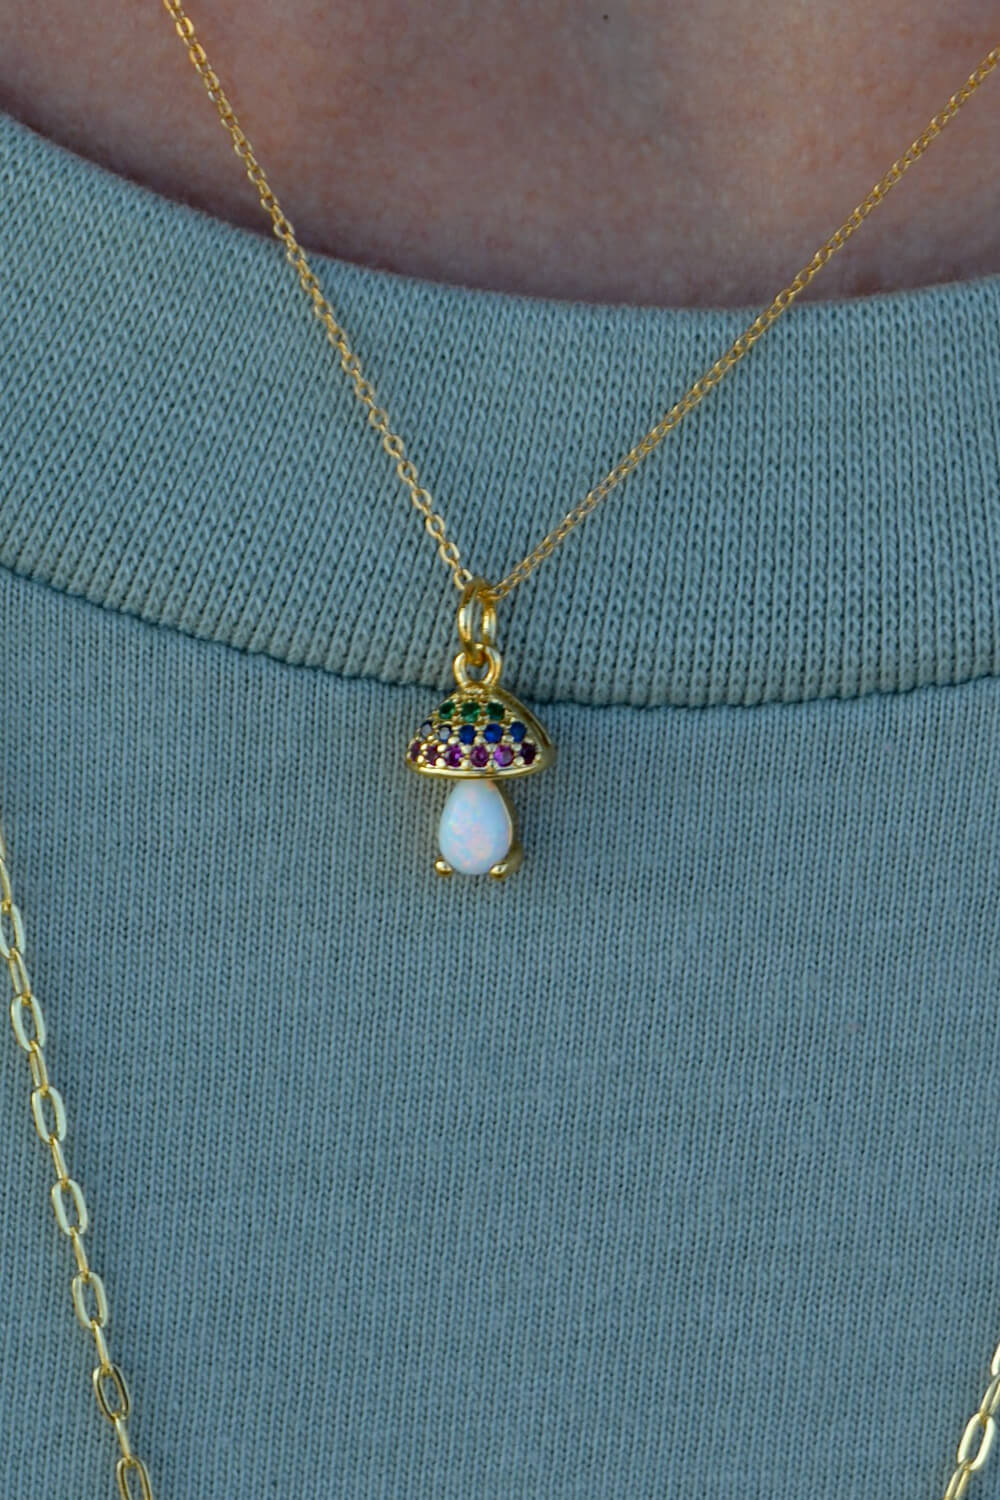 mini mushroom necklace - gold pavé white opal